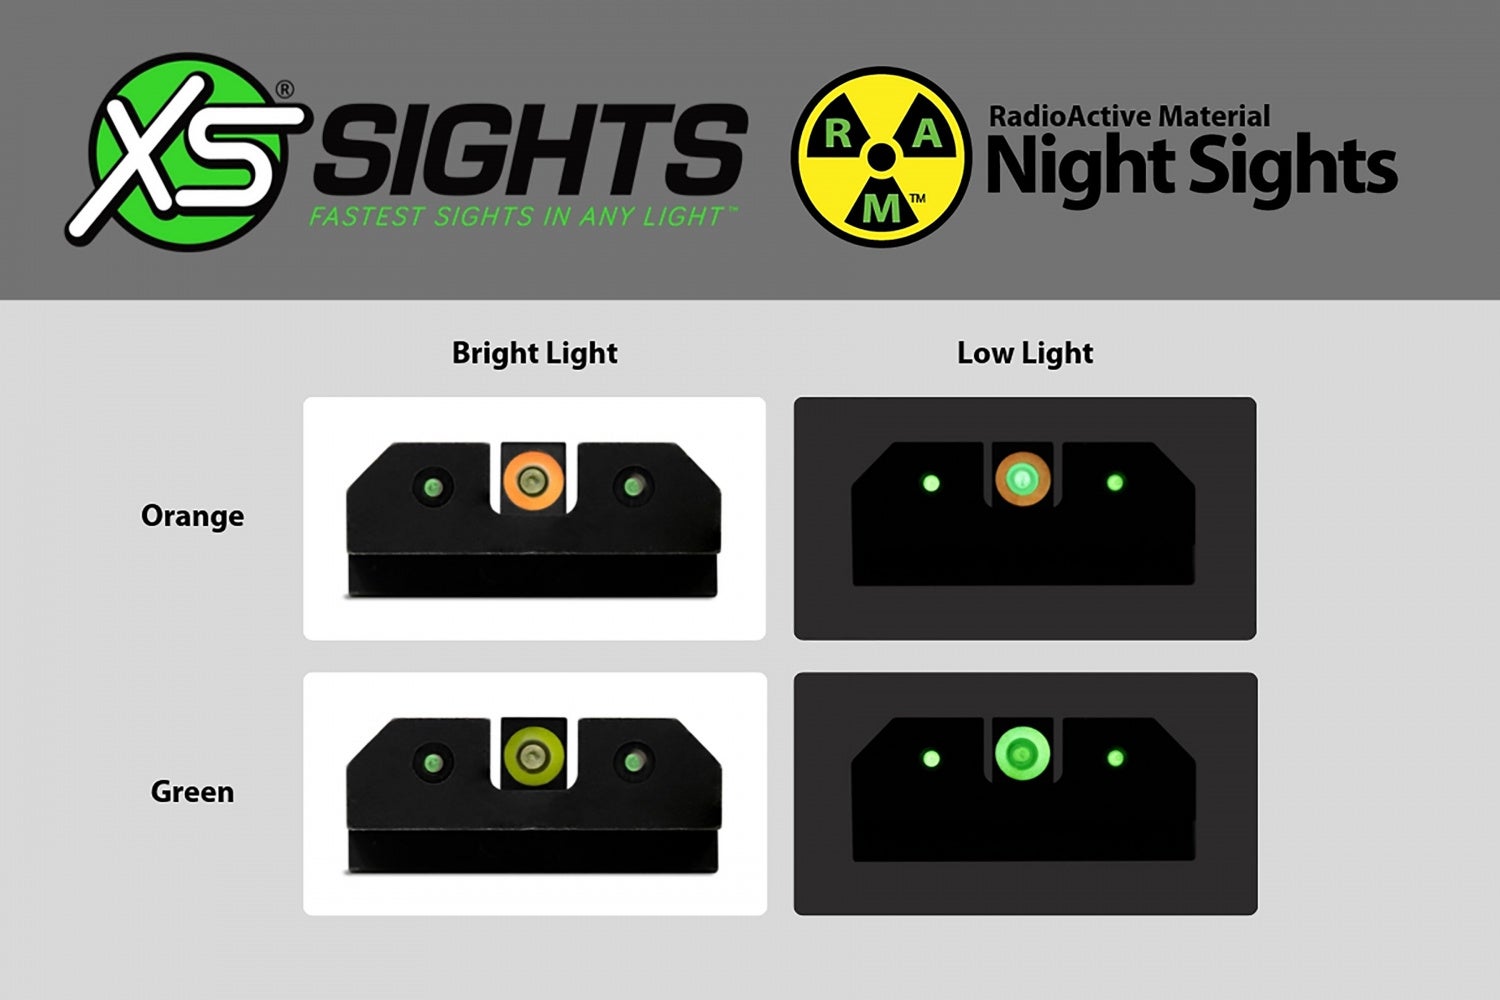 XS Sights RAM Night Sights Day & Night Sights